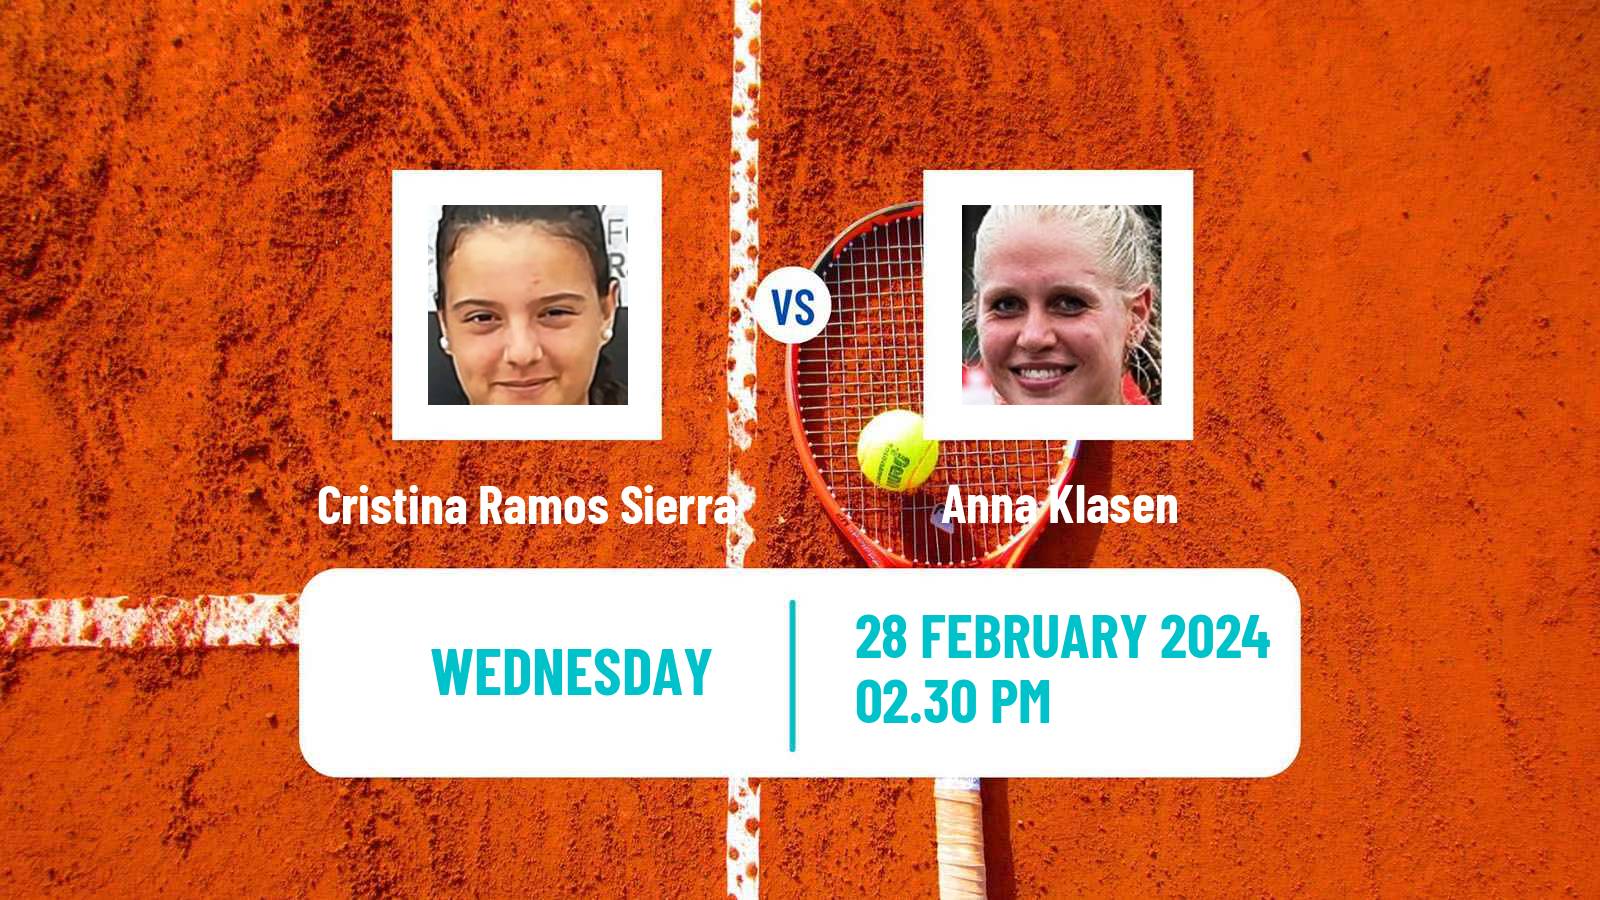 Tennis ITF W15 Manacor 3 Women Cristina Ramos Sierra - Anna Klasen